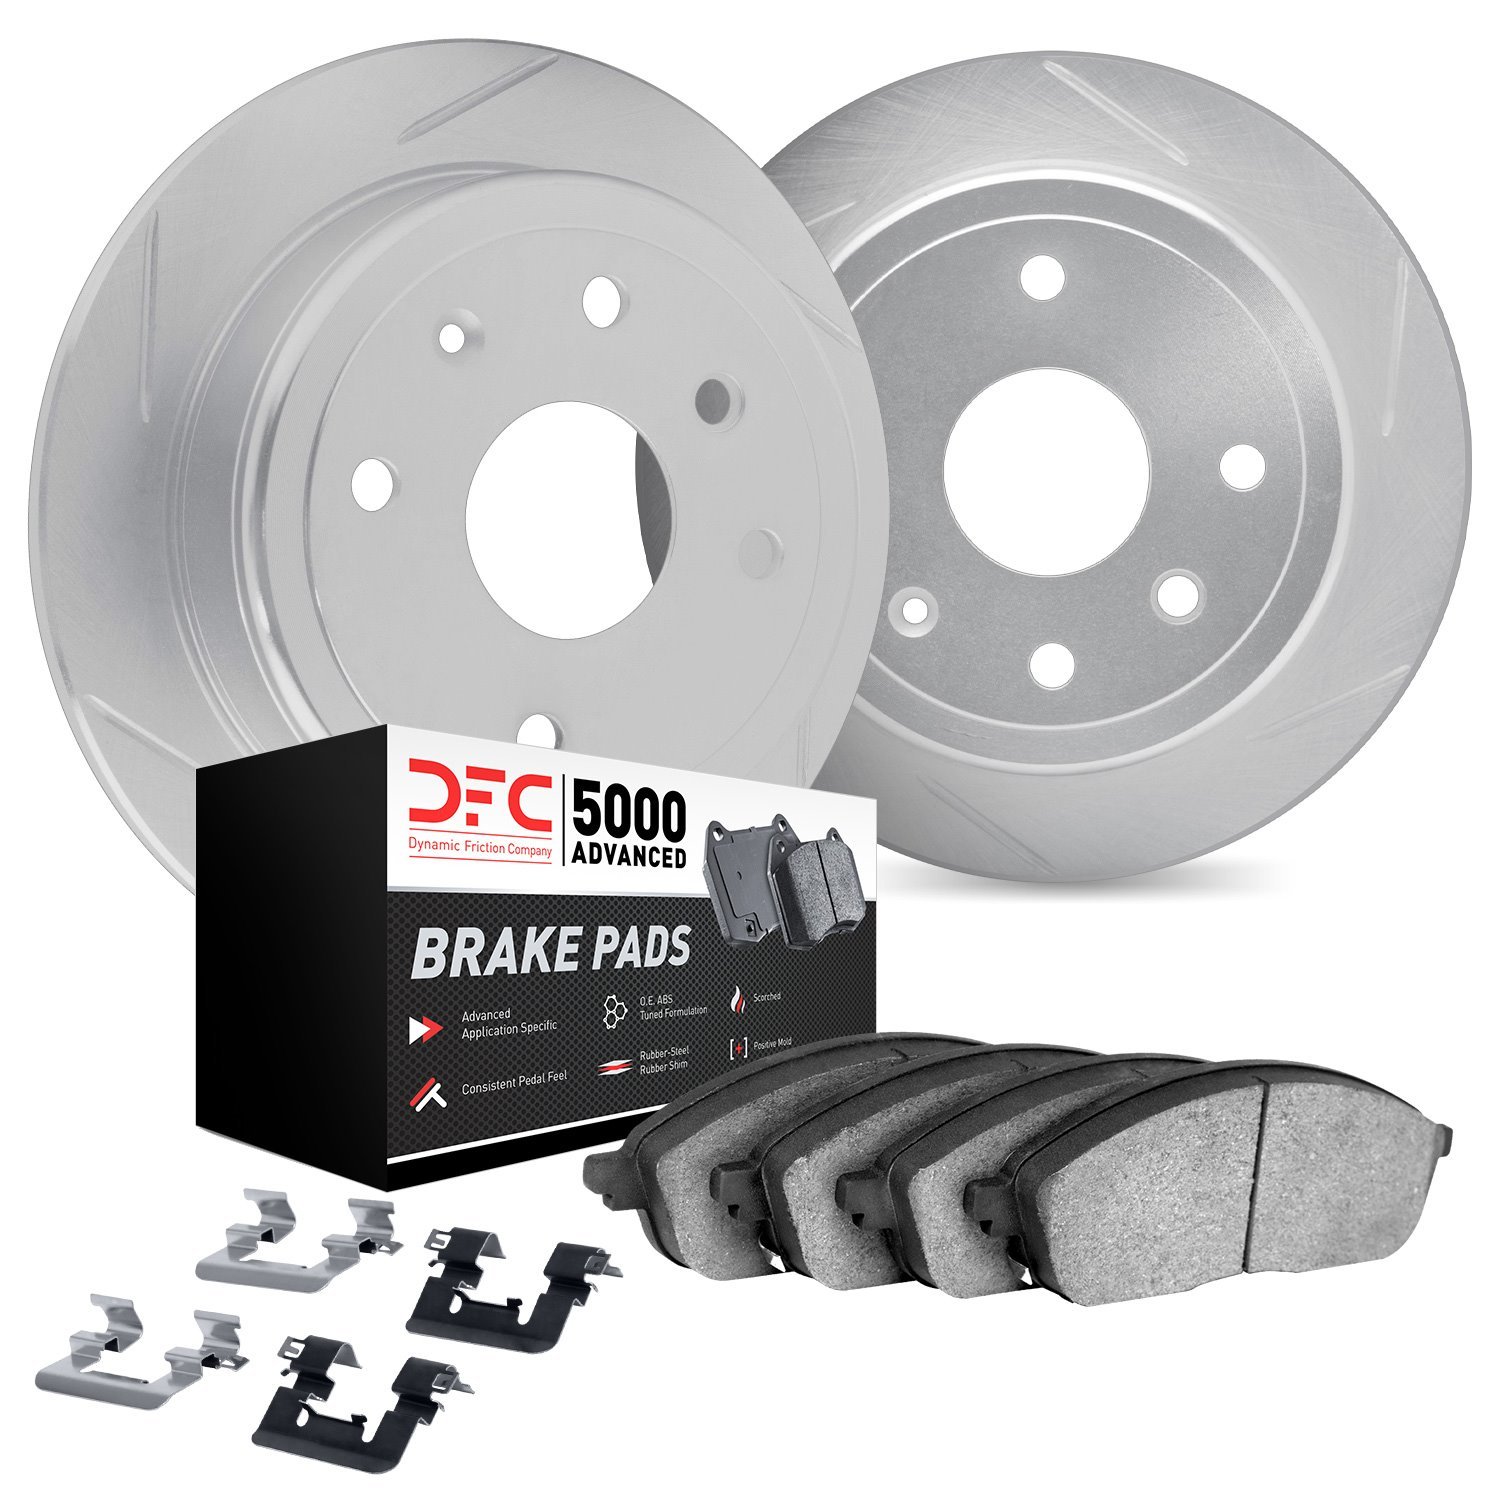 5512-54195 Slotted Brake Rotors w/5000 Advanced Brake Pads Kit & Hardware [Silver], 2011-2015 Ford/Lincoln/Mercury/Mazda, Positi